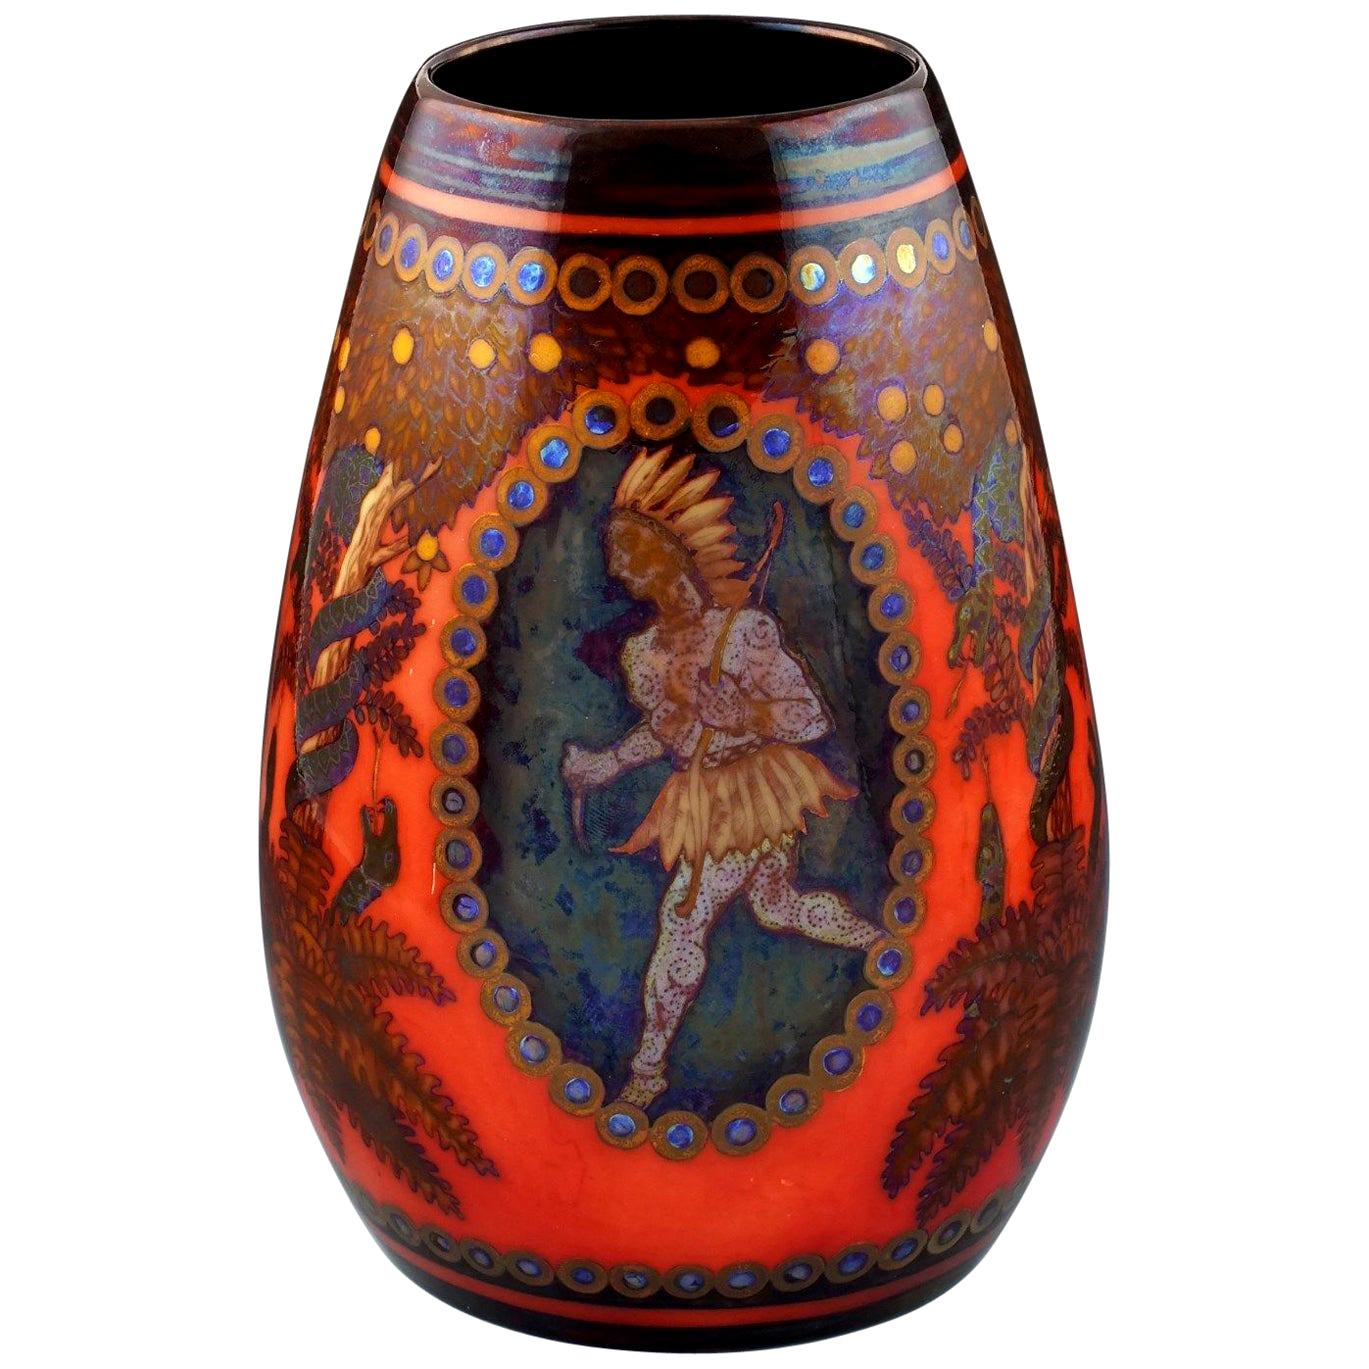 Zsolnay Pecs Raised Mark Art Pottery Eosin Glaze Vase with American Indian